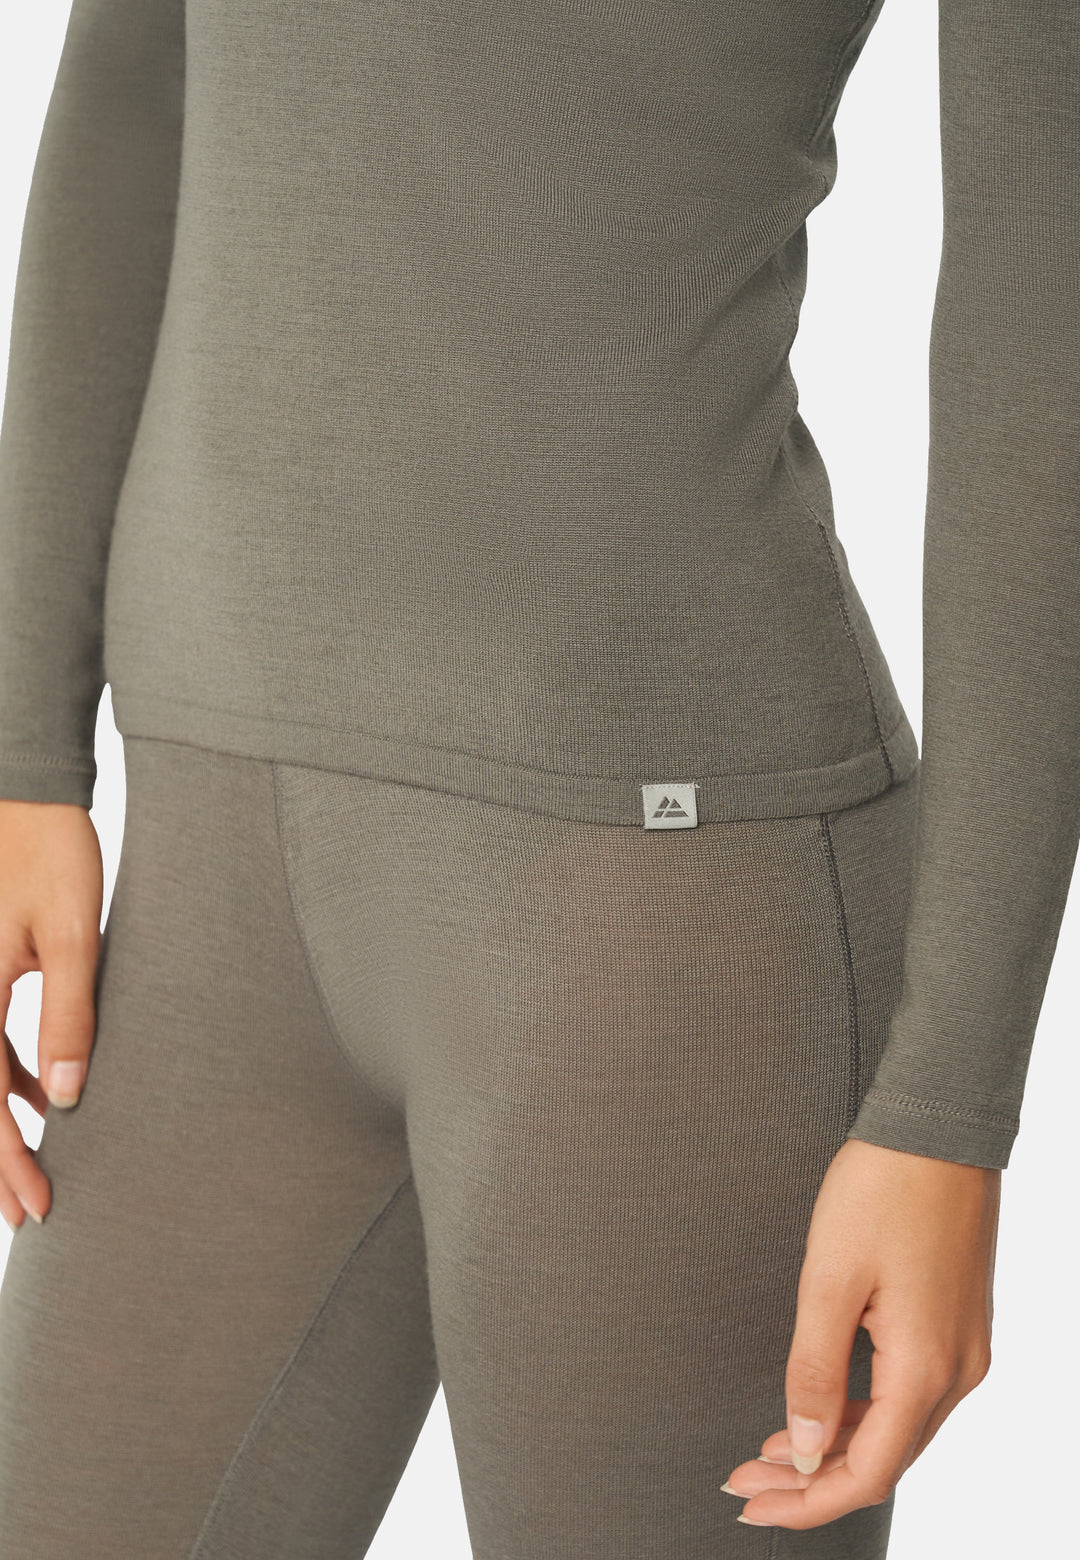 Women's Thermal Panties Briefs: Moisture Wicking Merino Wool Silk